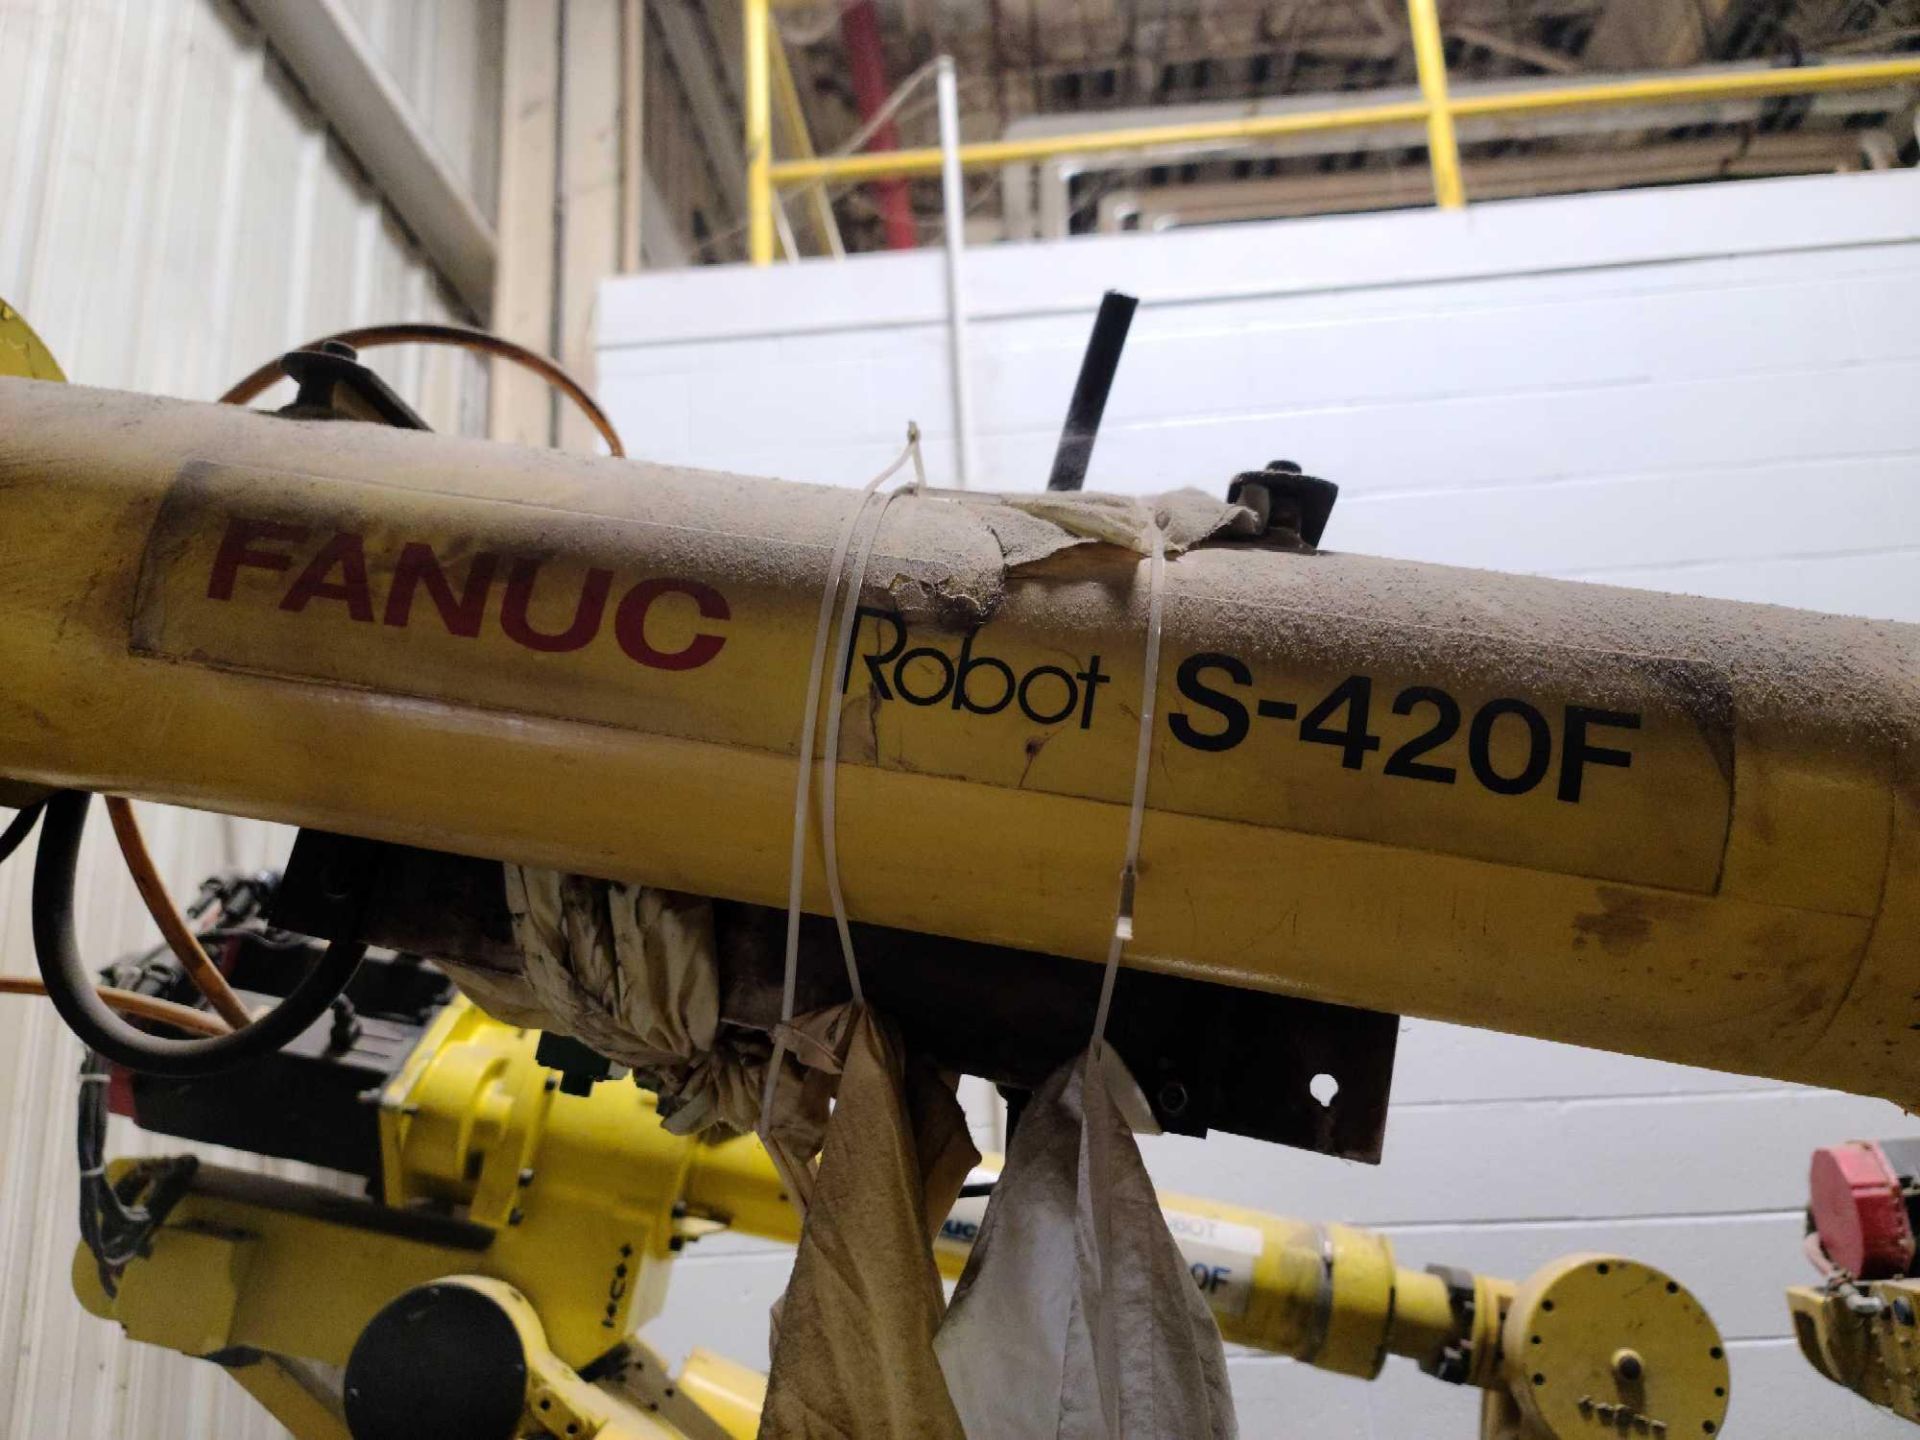 Fanuc Robot S-420F Robotic Arm - Image 3 of 3